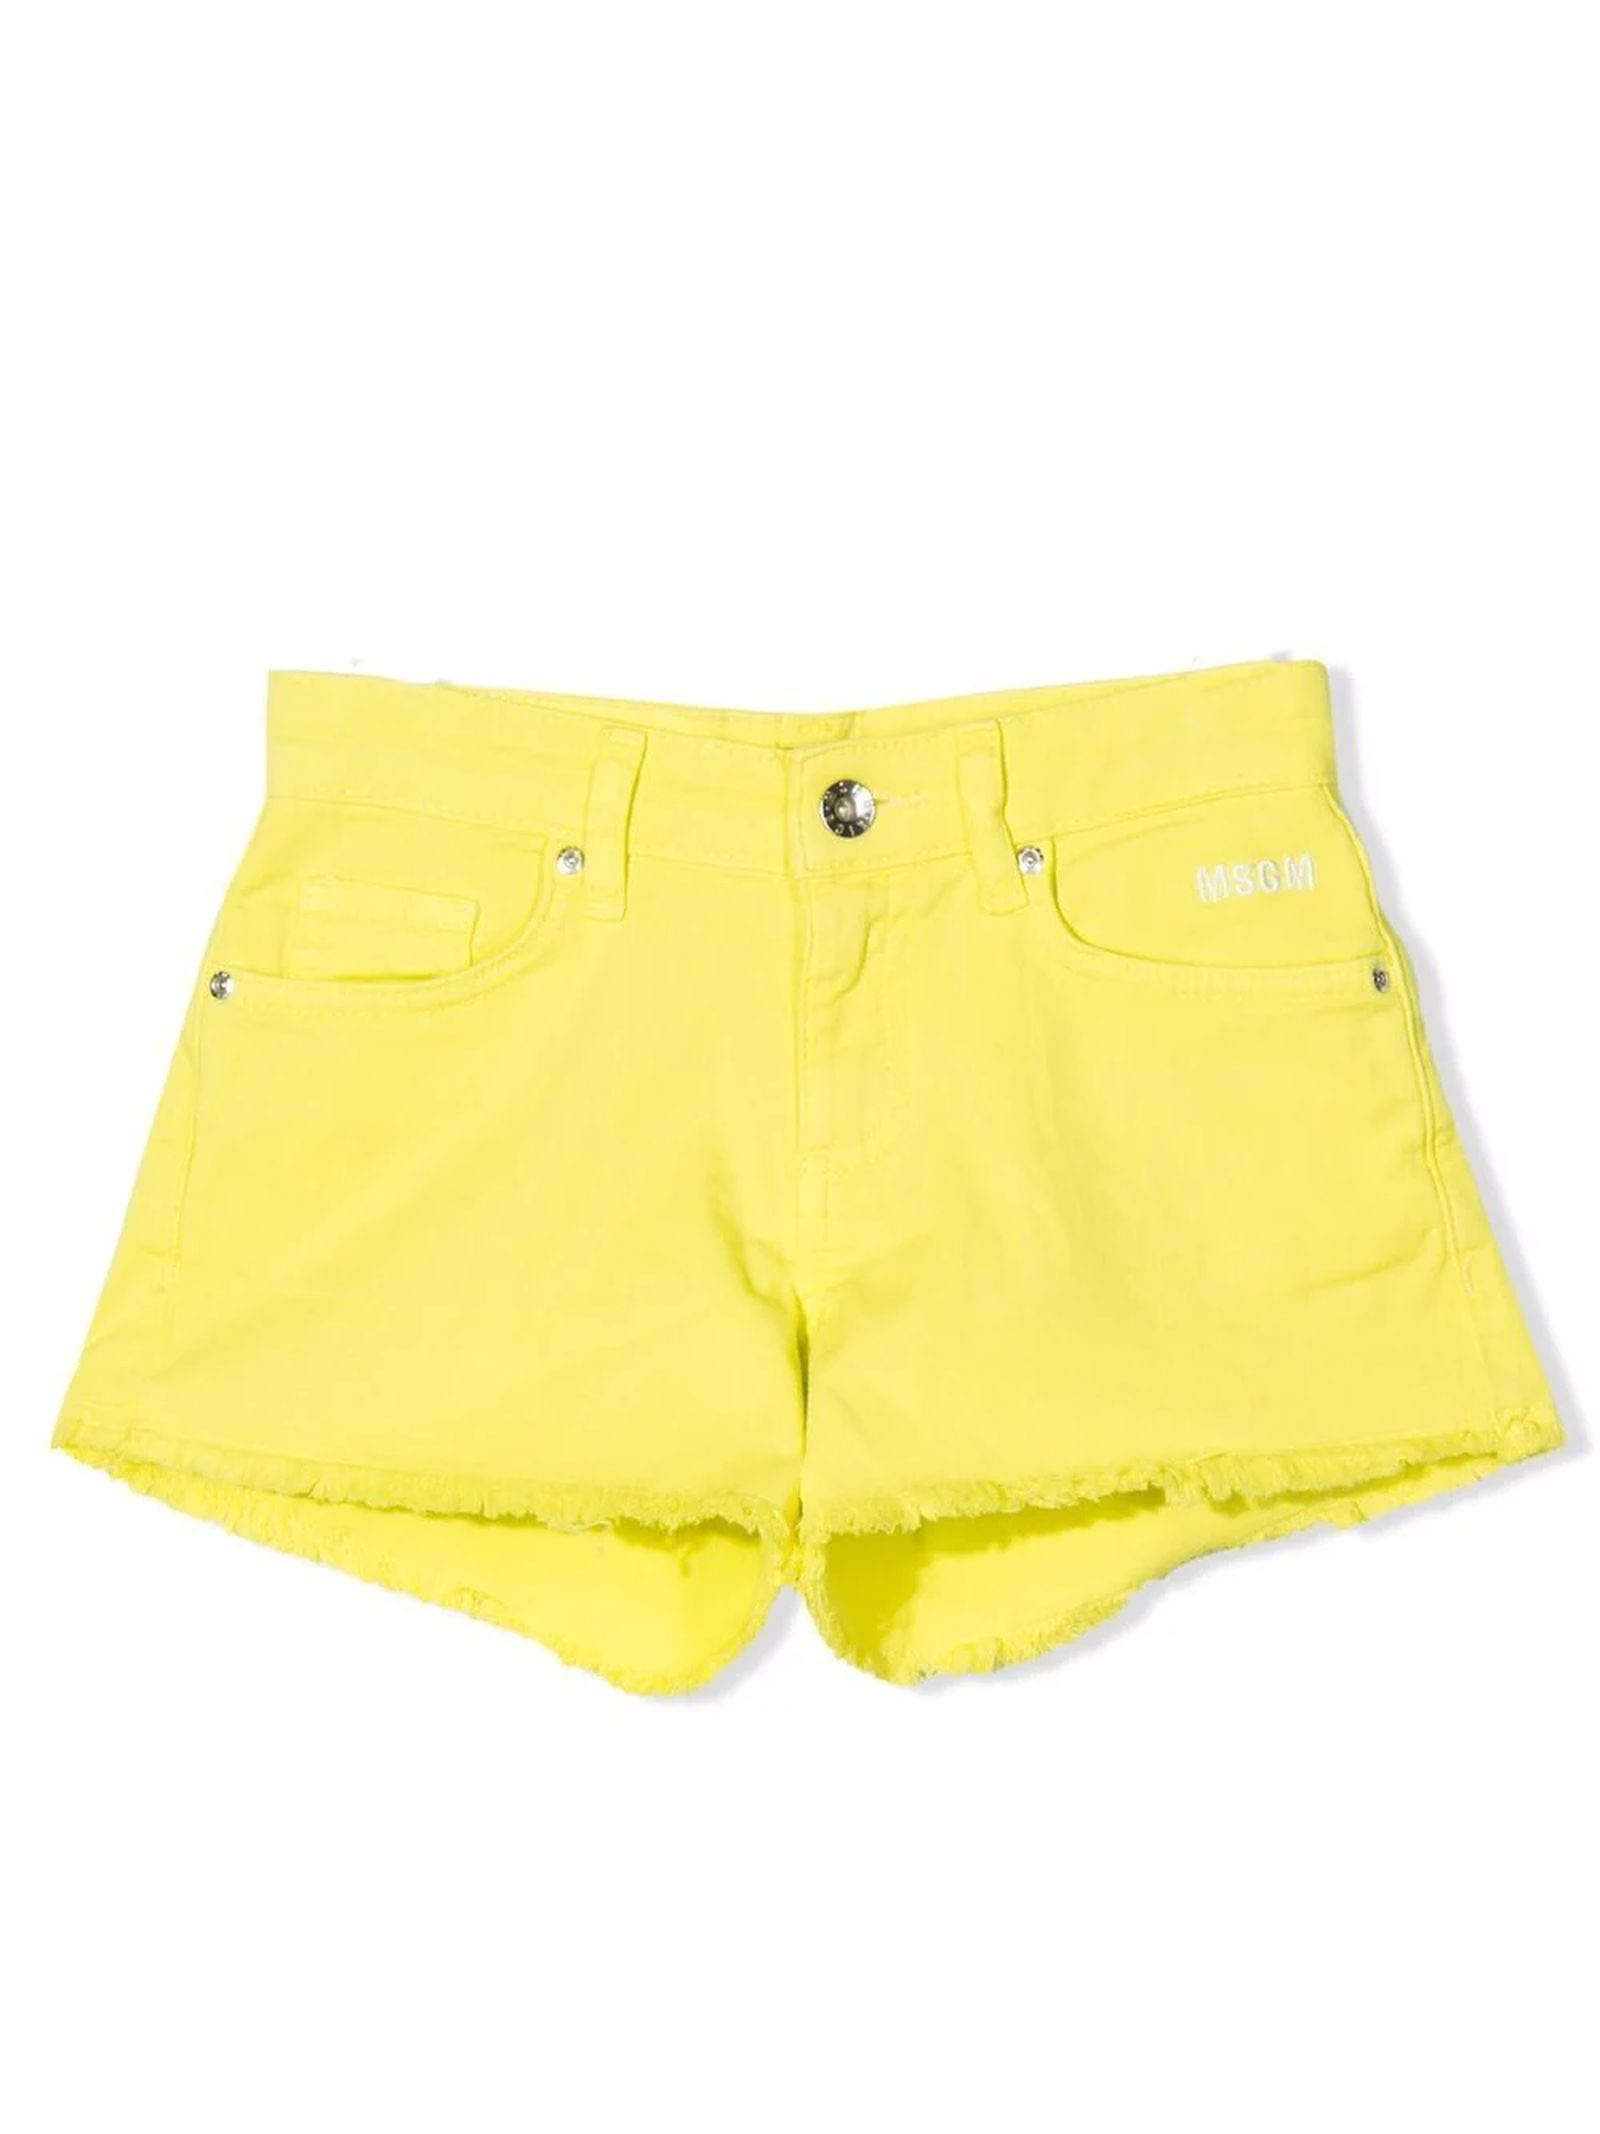 MSGM Yellow Cotton Shorts